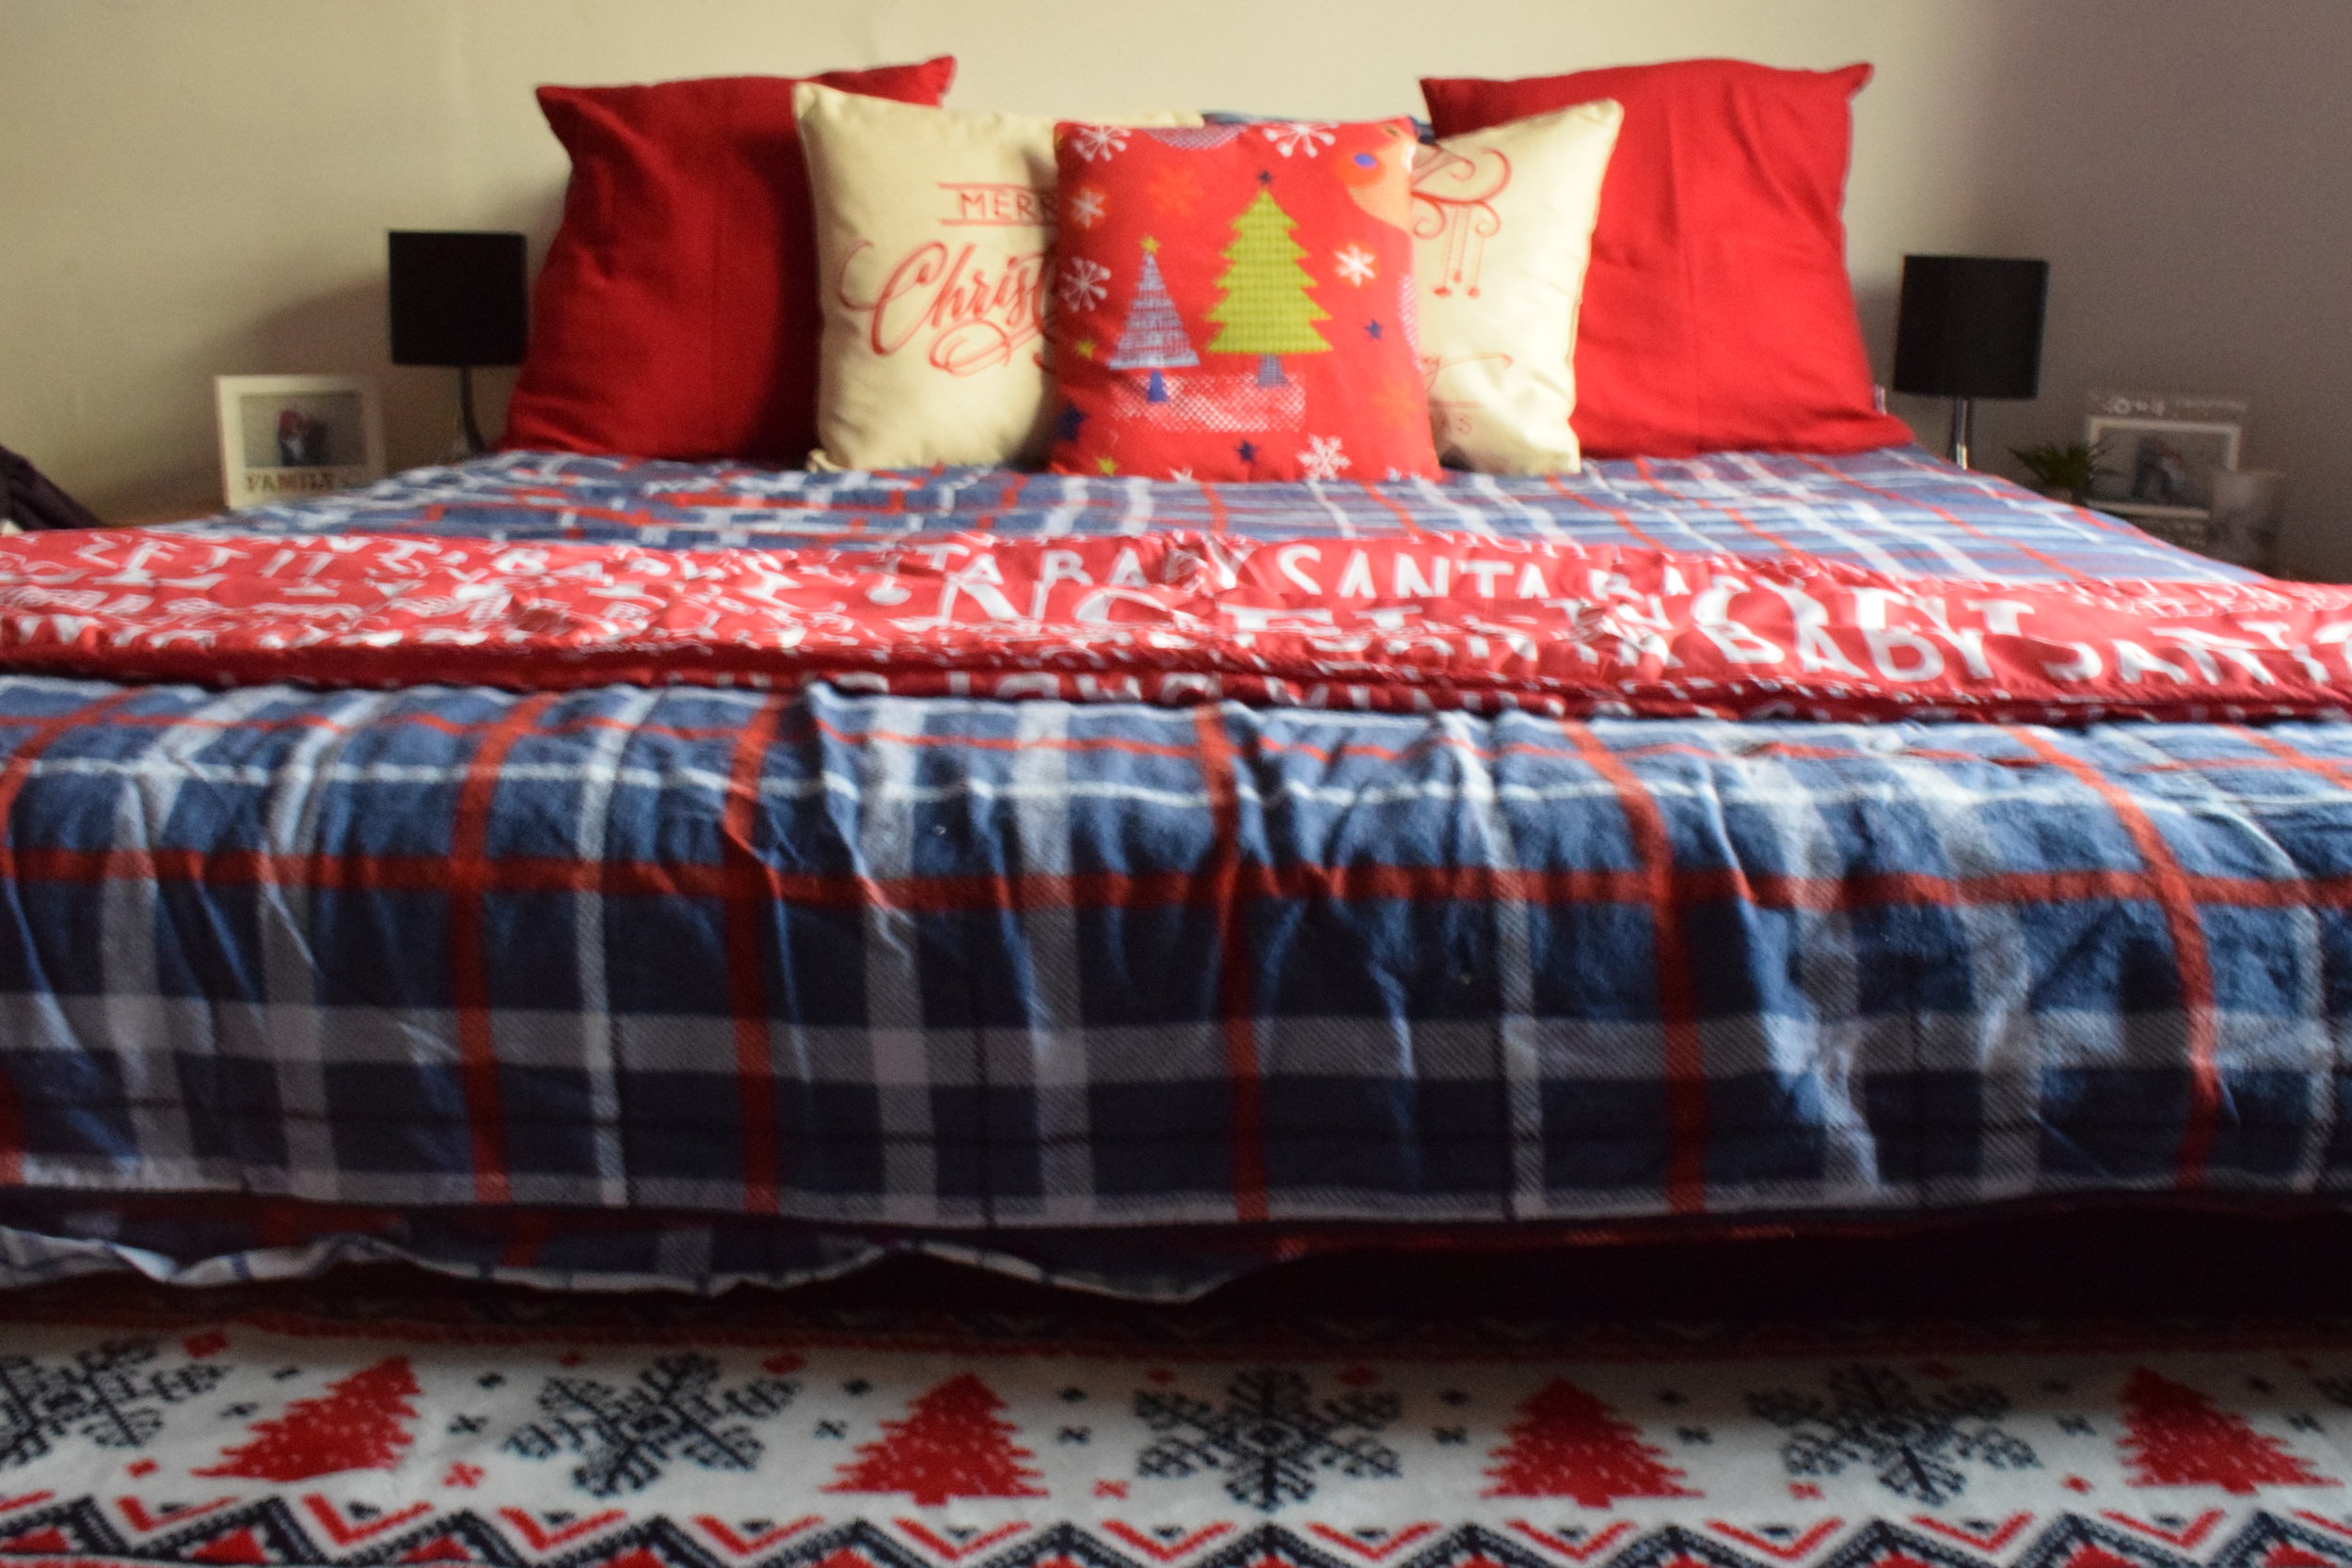 Christmas bedspread